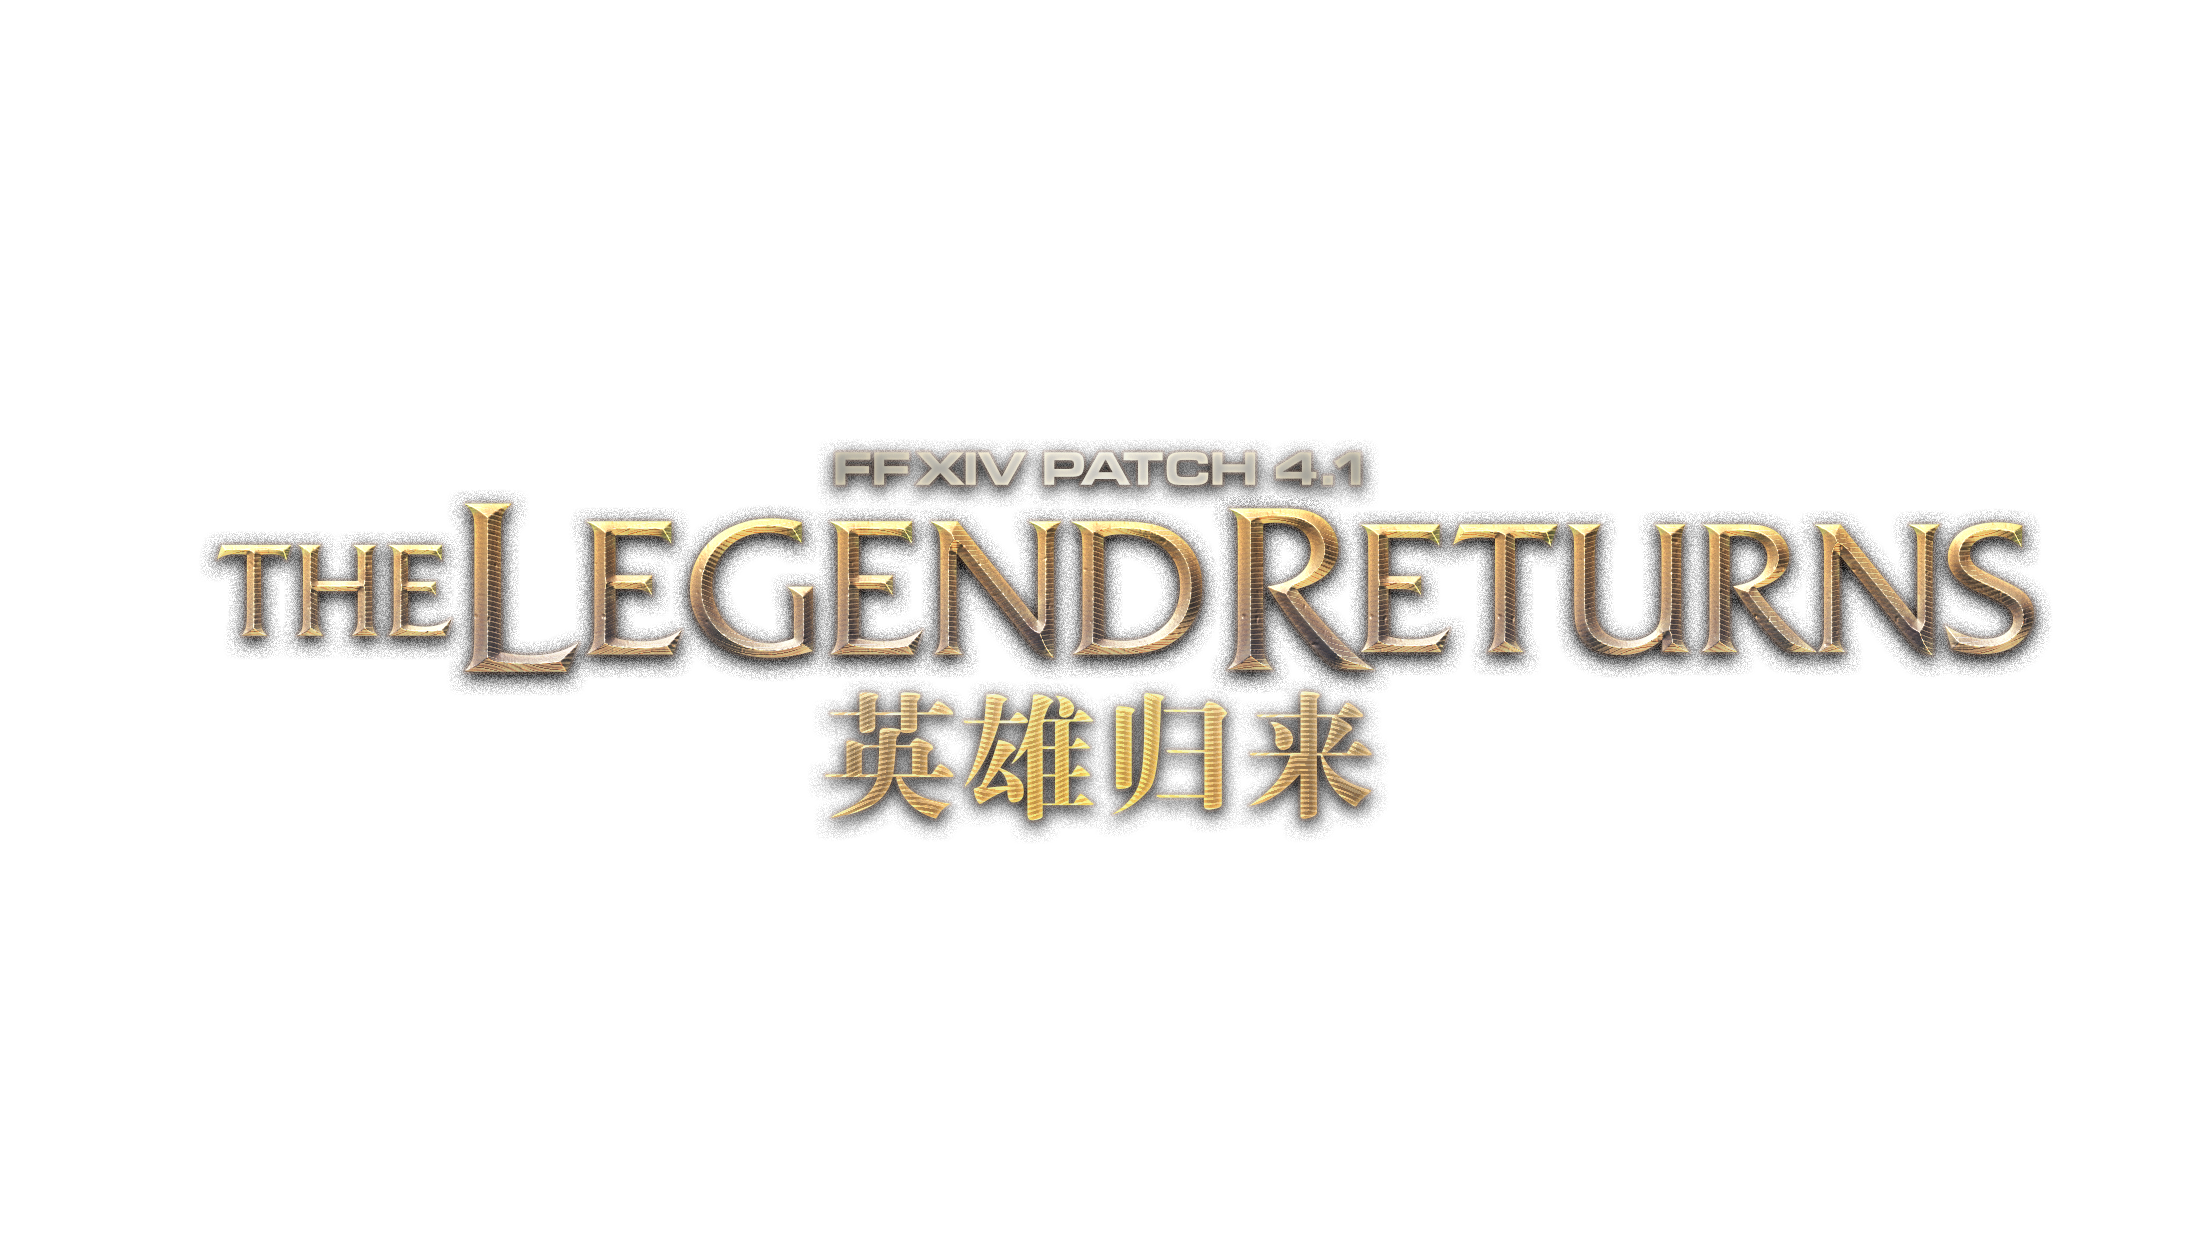 The Legend Returns - Final Fantasy XIV